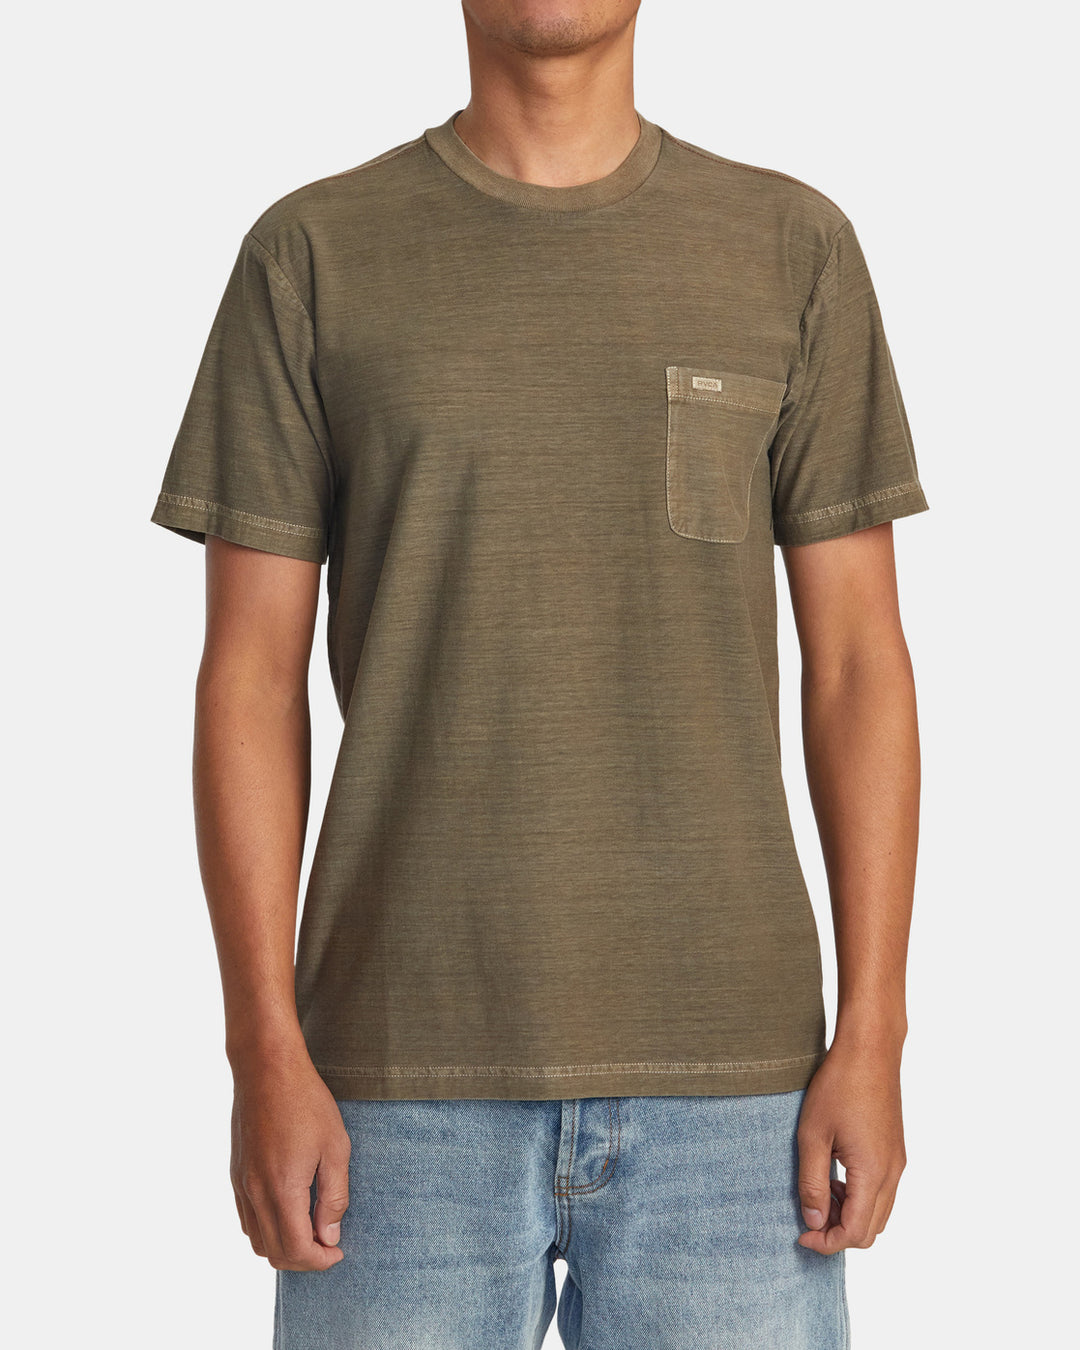 RVCA PTC Stripe T-Shirt - Mushroom - Sun Diego Boardshop